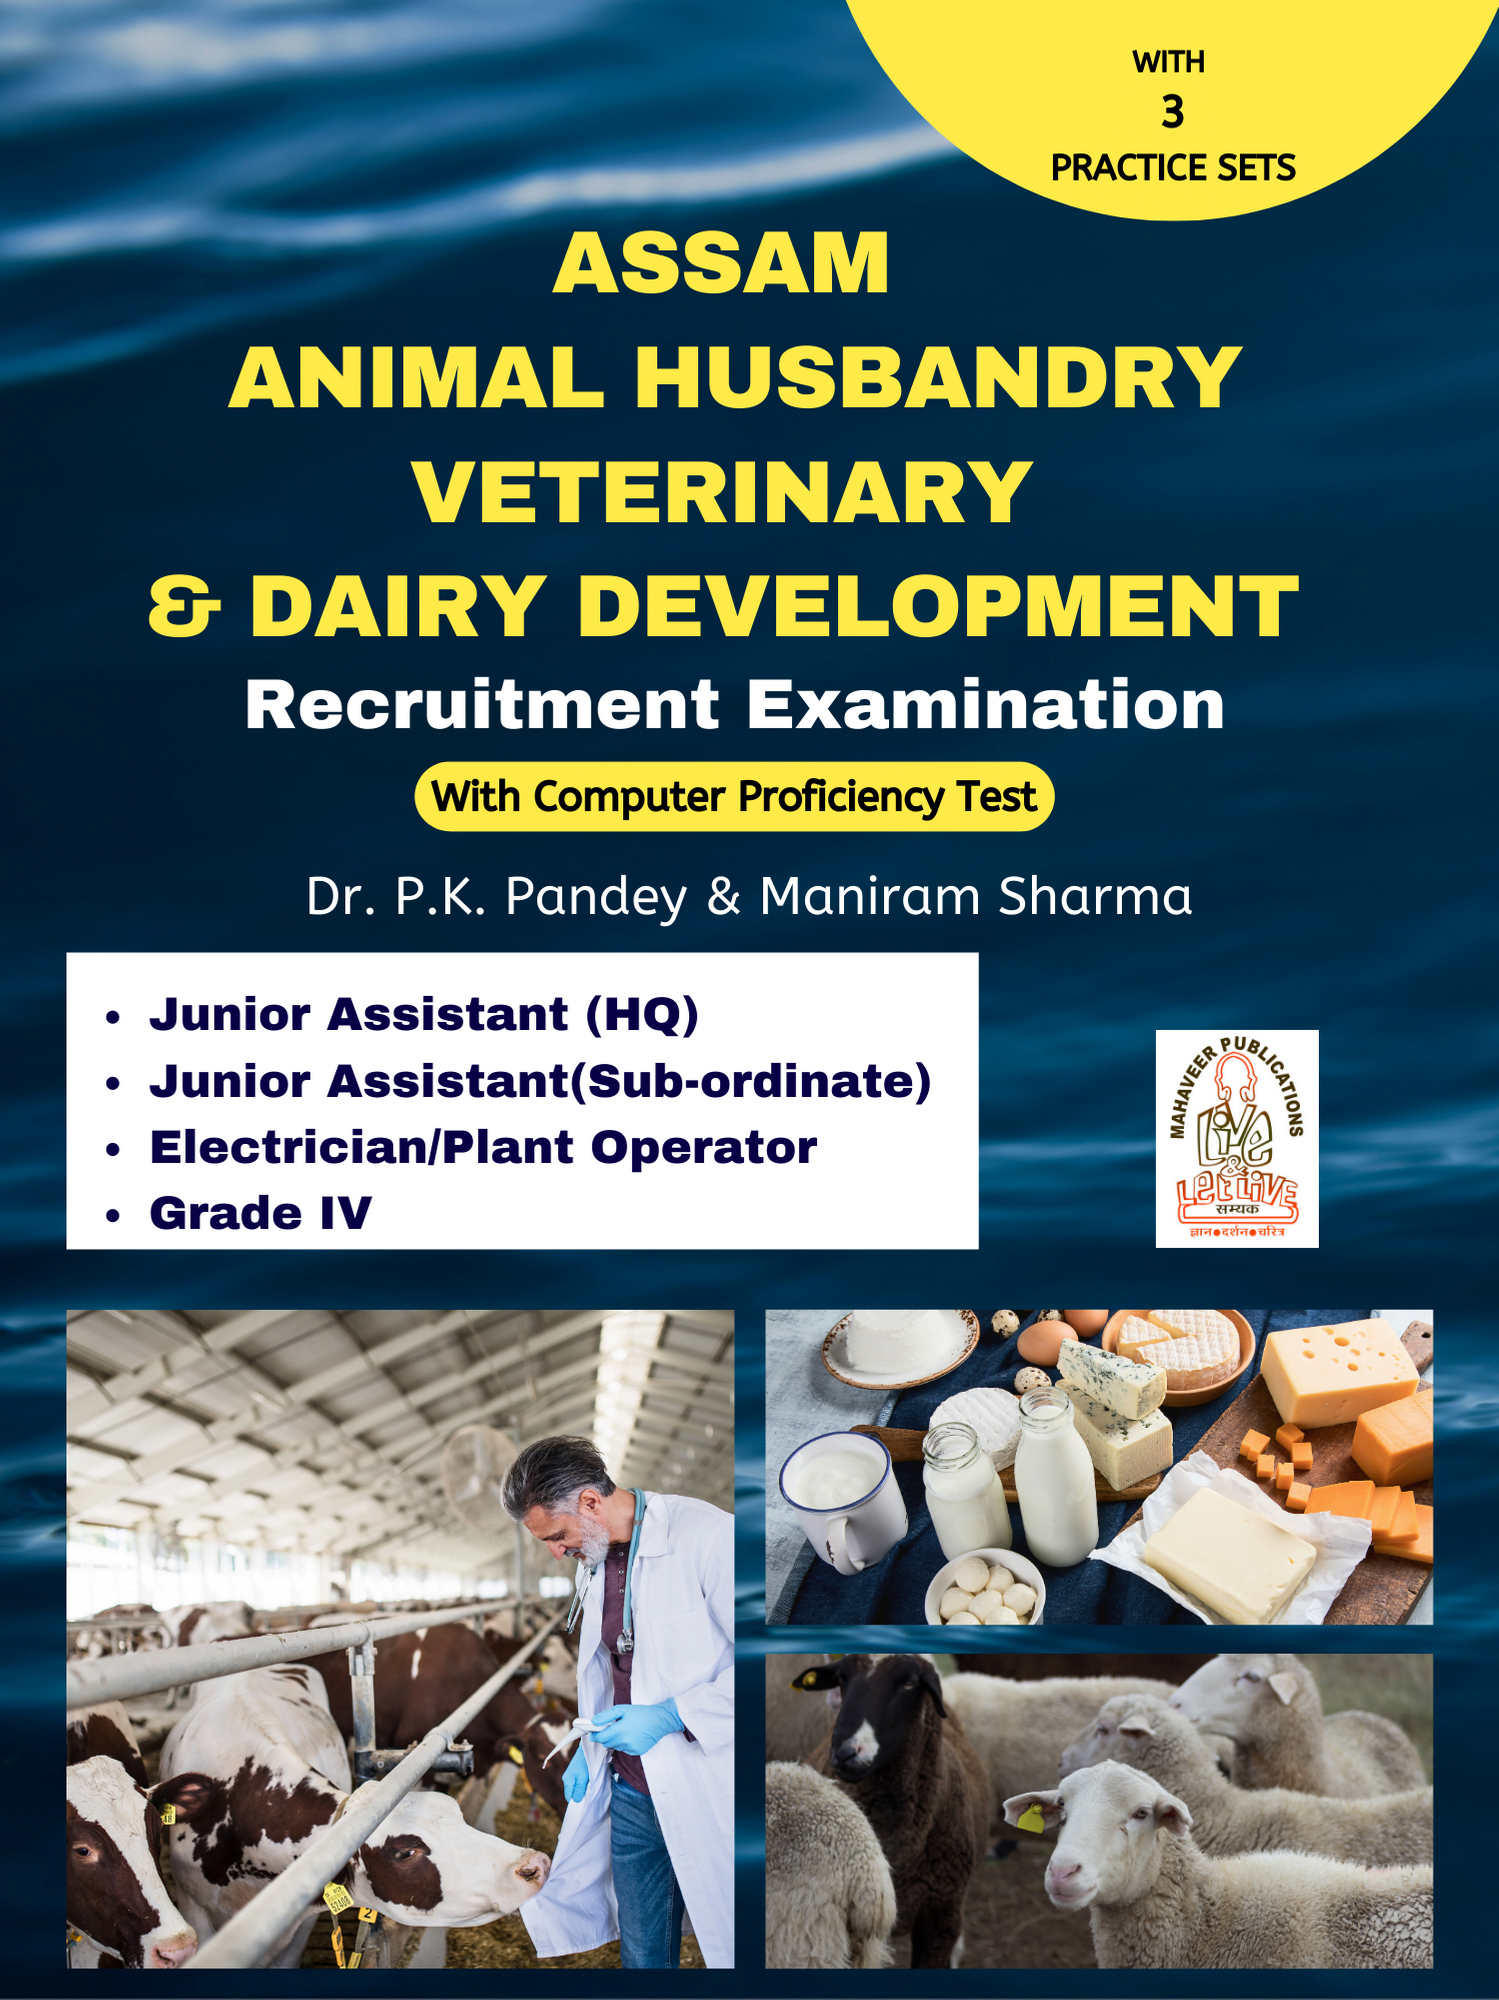 Assam-Animal-Husbandry-Veterinary-Dairy-Development-2.png